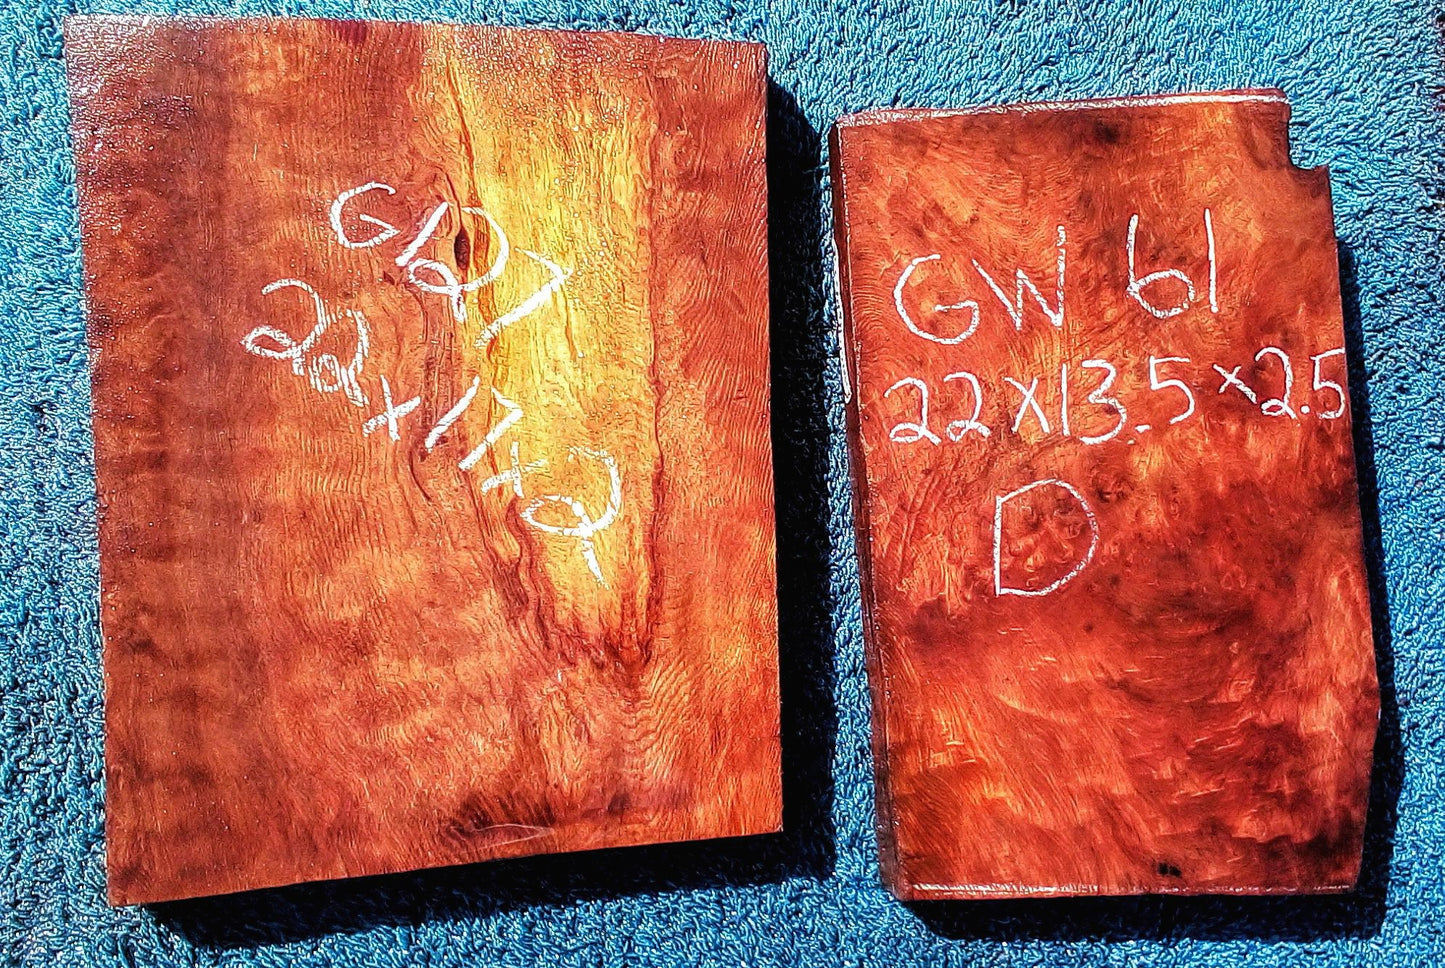 Quilted redwood | guitar billet | wood turning | DIY crafts | gw61-g127